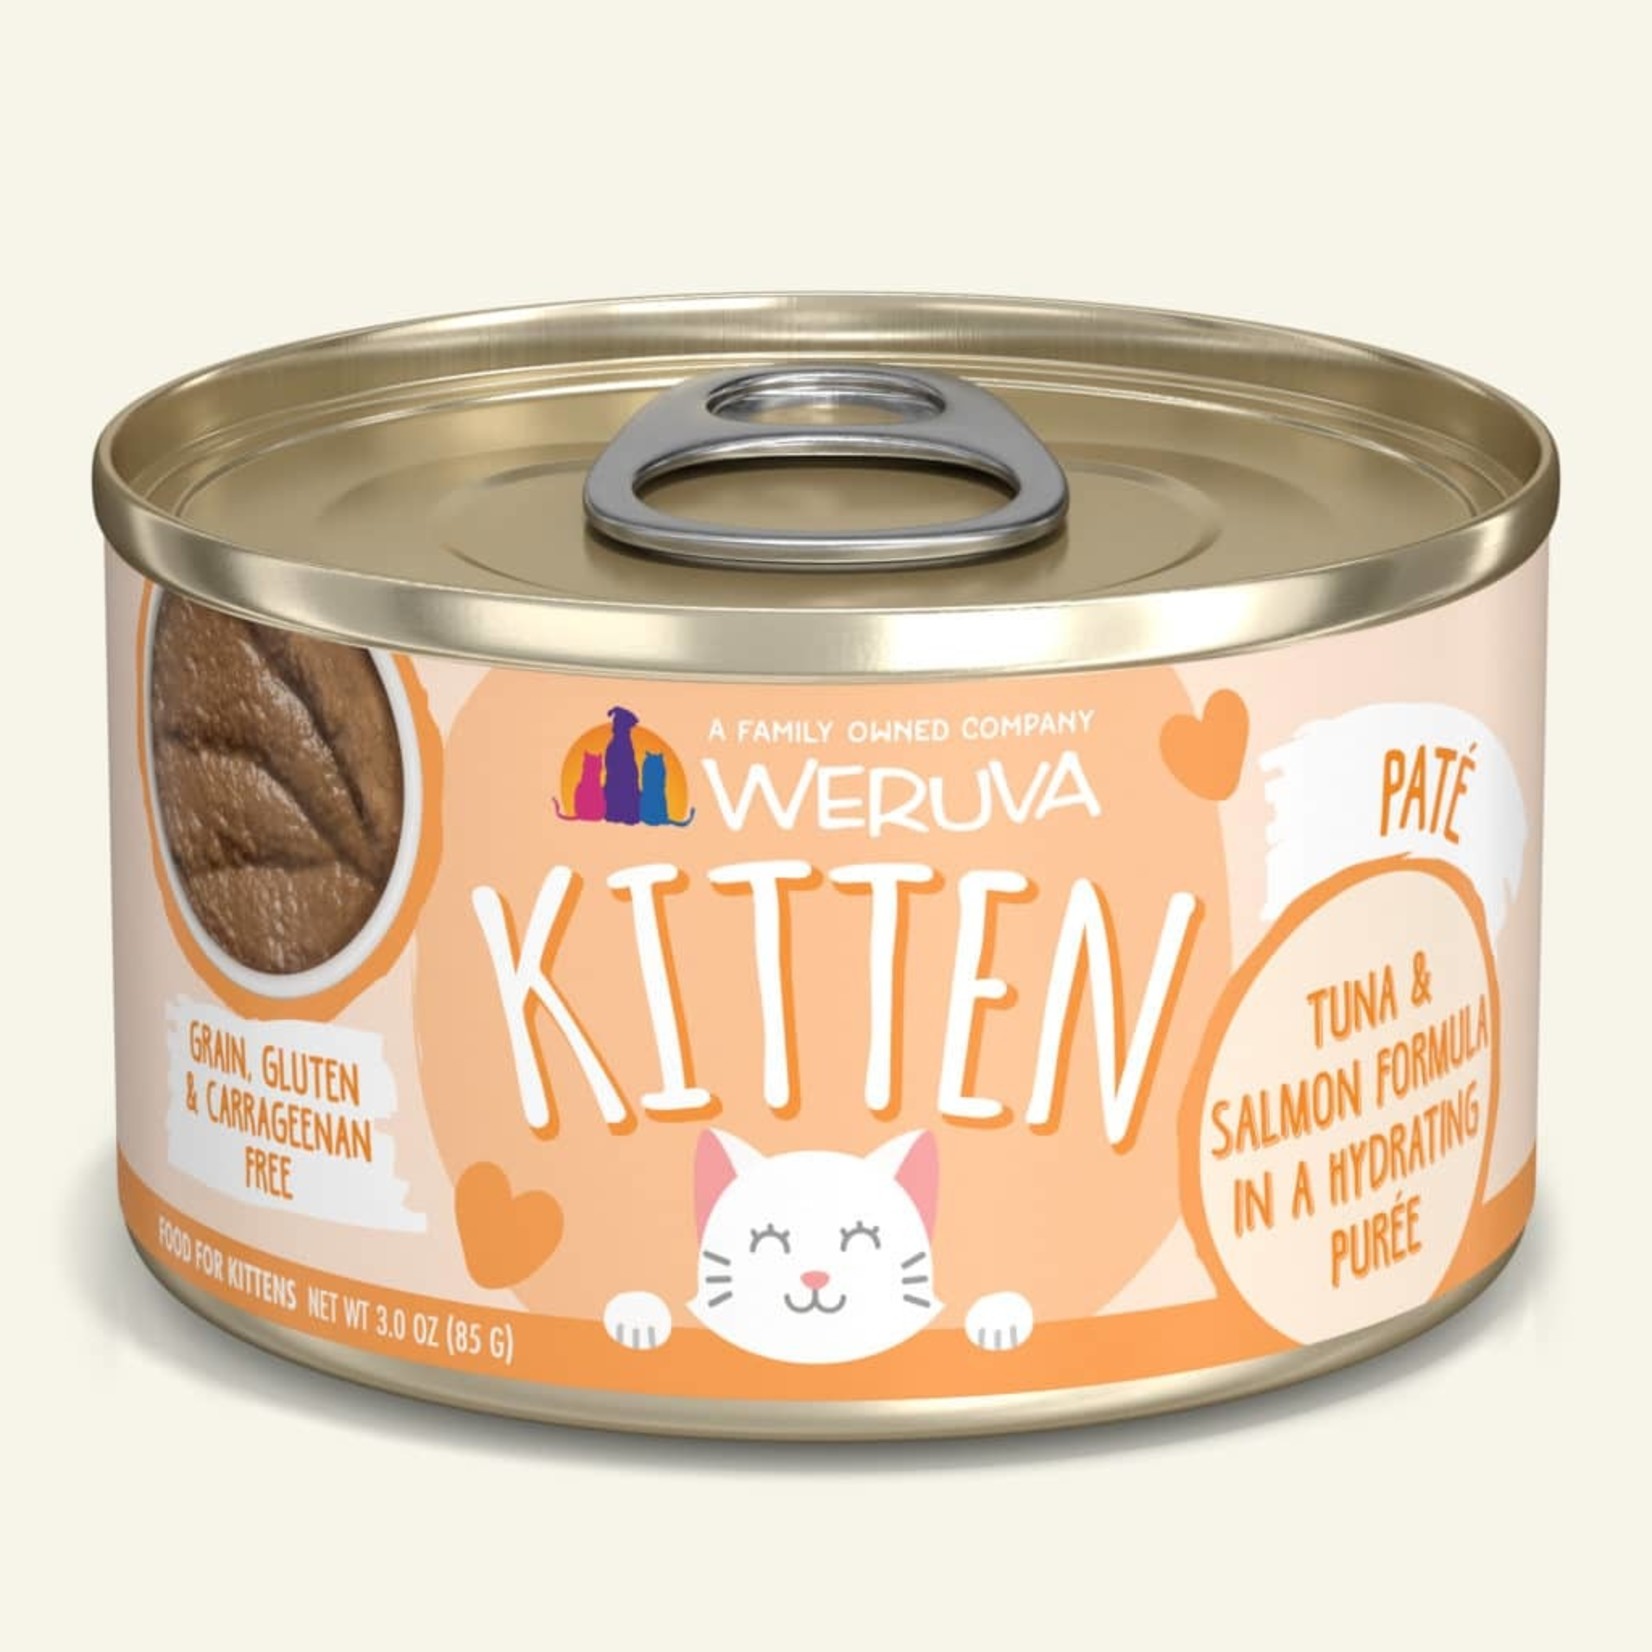 Weruva Weruva Kitten Wet Cat Food Tuna and Salmon Formula in a Hydrating Puree 3.0oz Can Grain Free